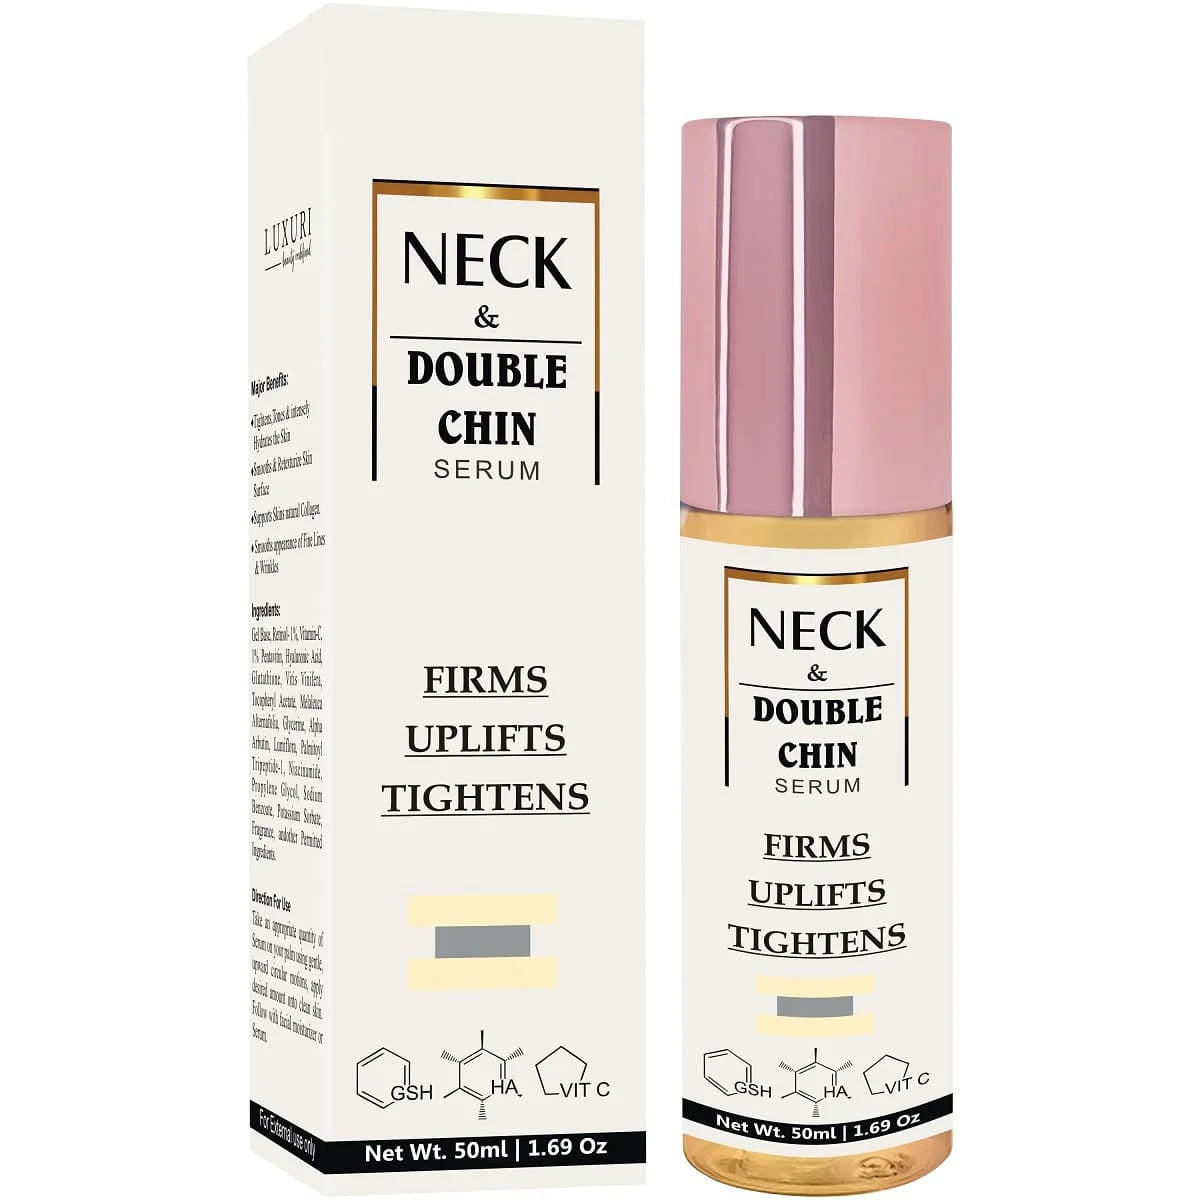 LUXURI Neck & Double Chin Serum Neck Firming & Tightening 50ml